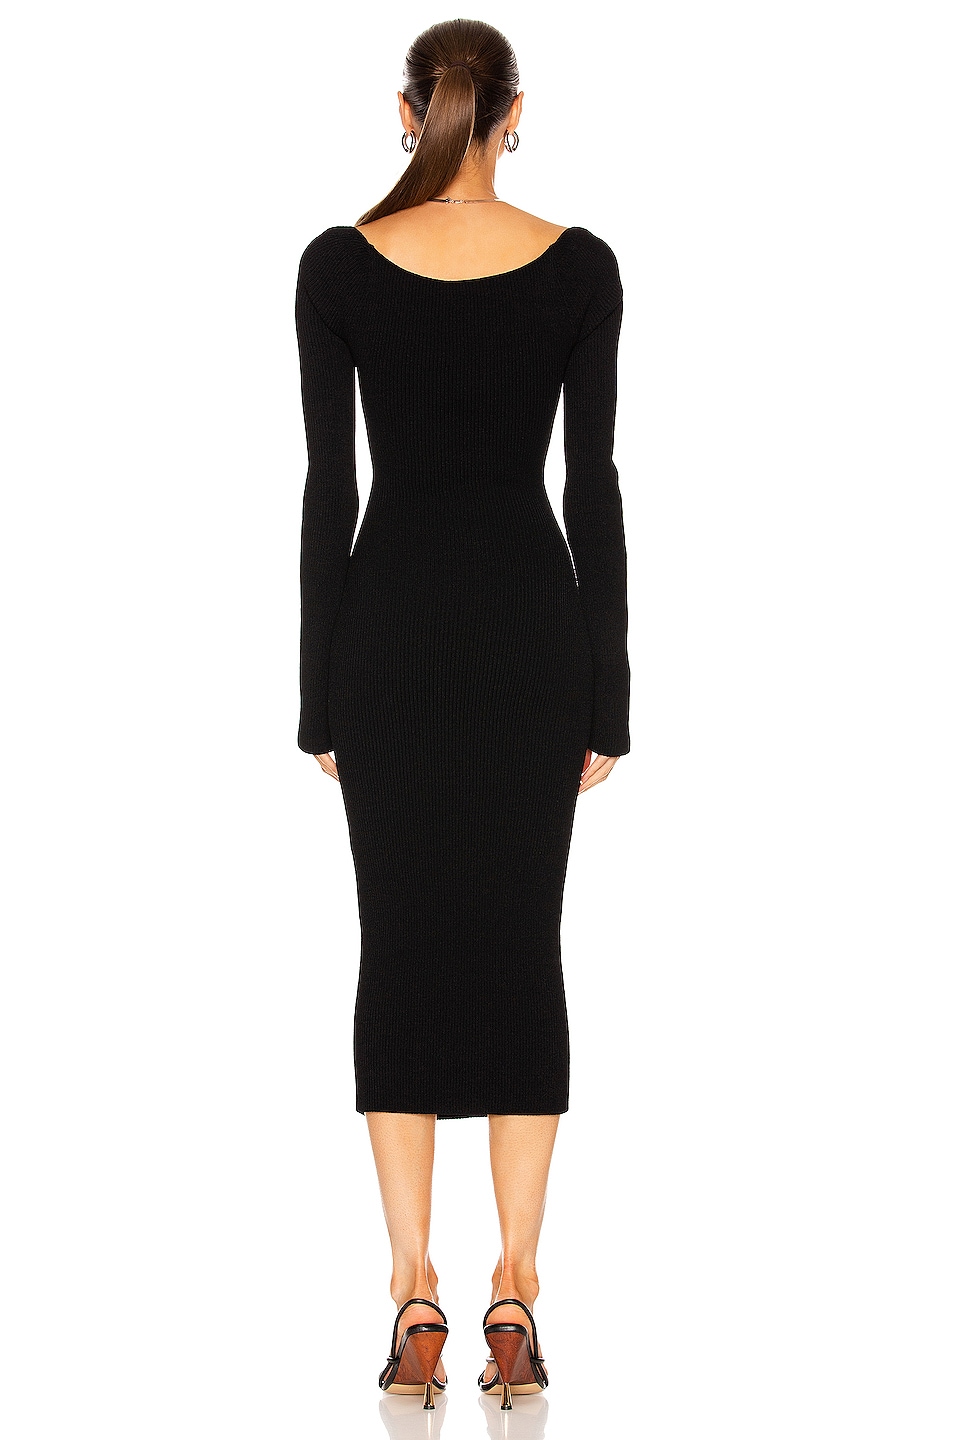 KHAITE Beth Long Sleeve Bustier Dress in Black | FWRD